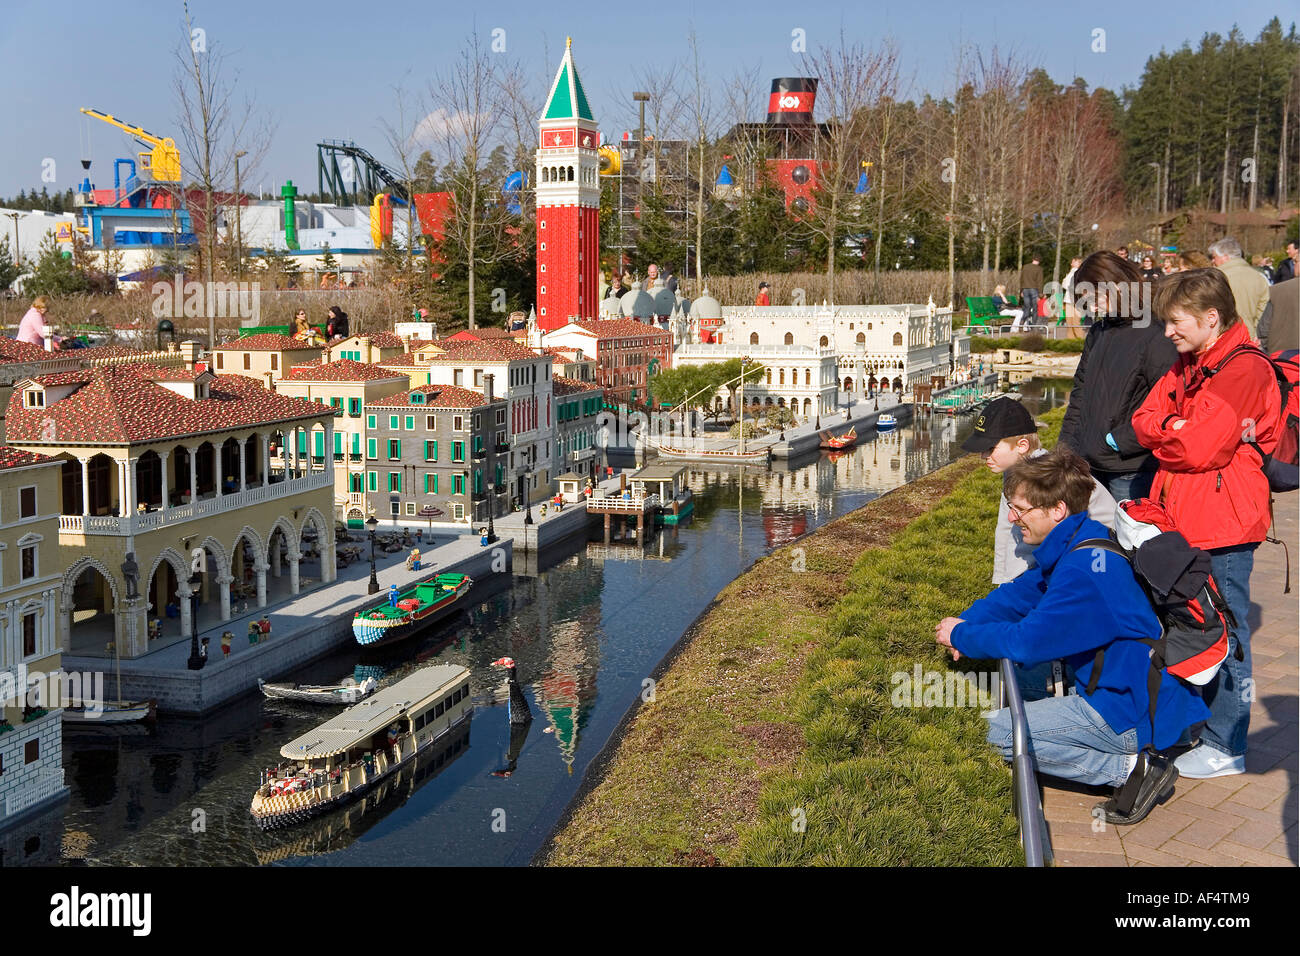 Impressions from the Legoland Park near Guenzburg on the left the Miniland Stock Photo